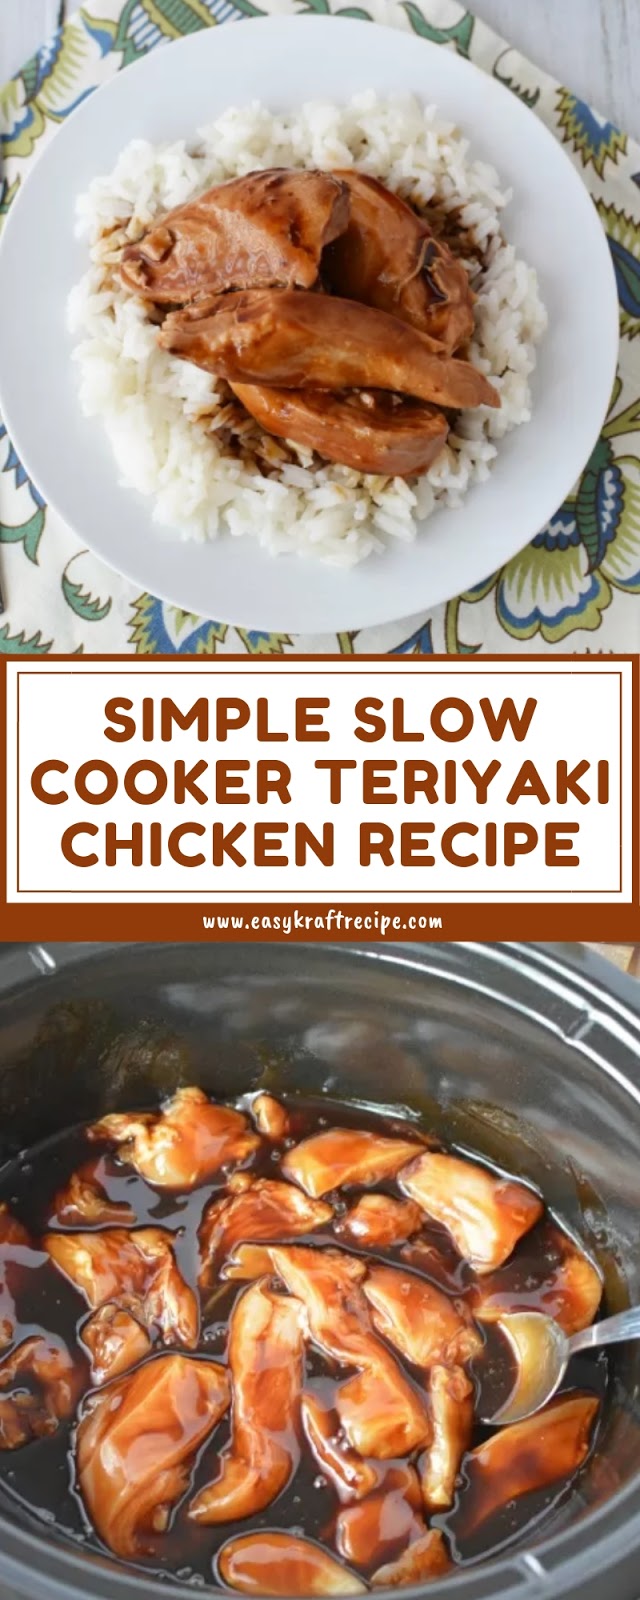 SIMPLE SLOW COOKER TERIYAKI CHICKEN RECIPE